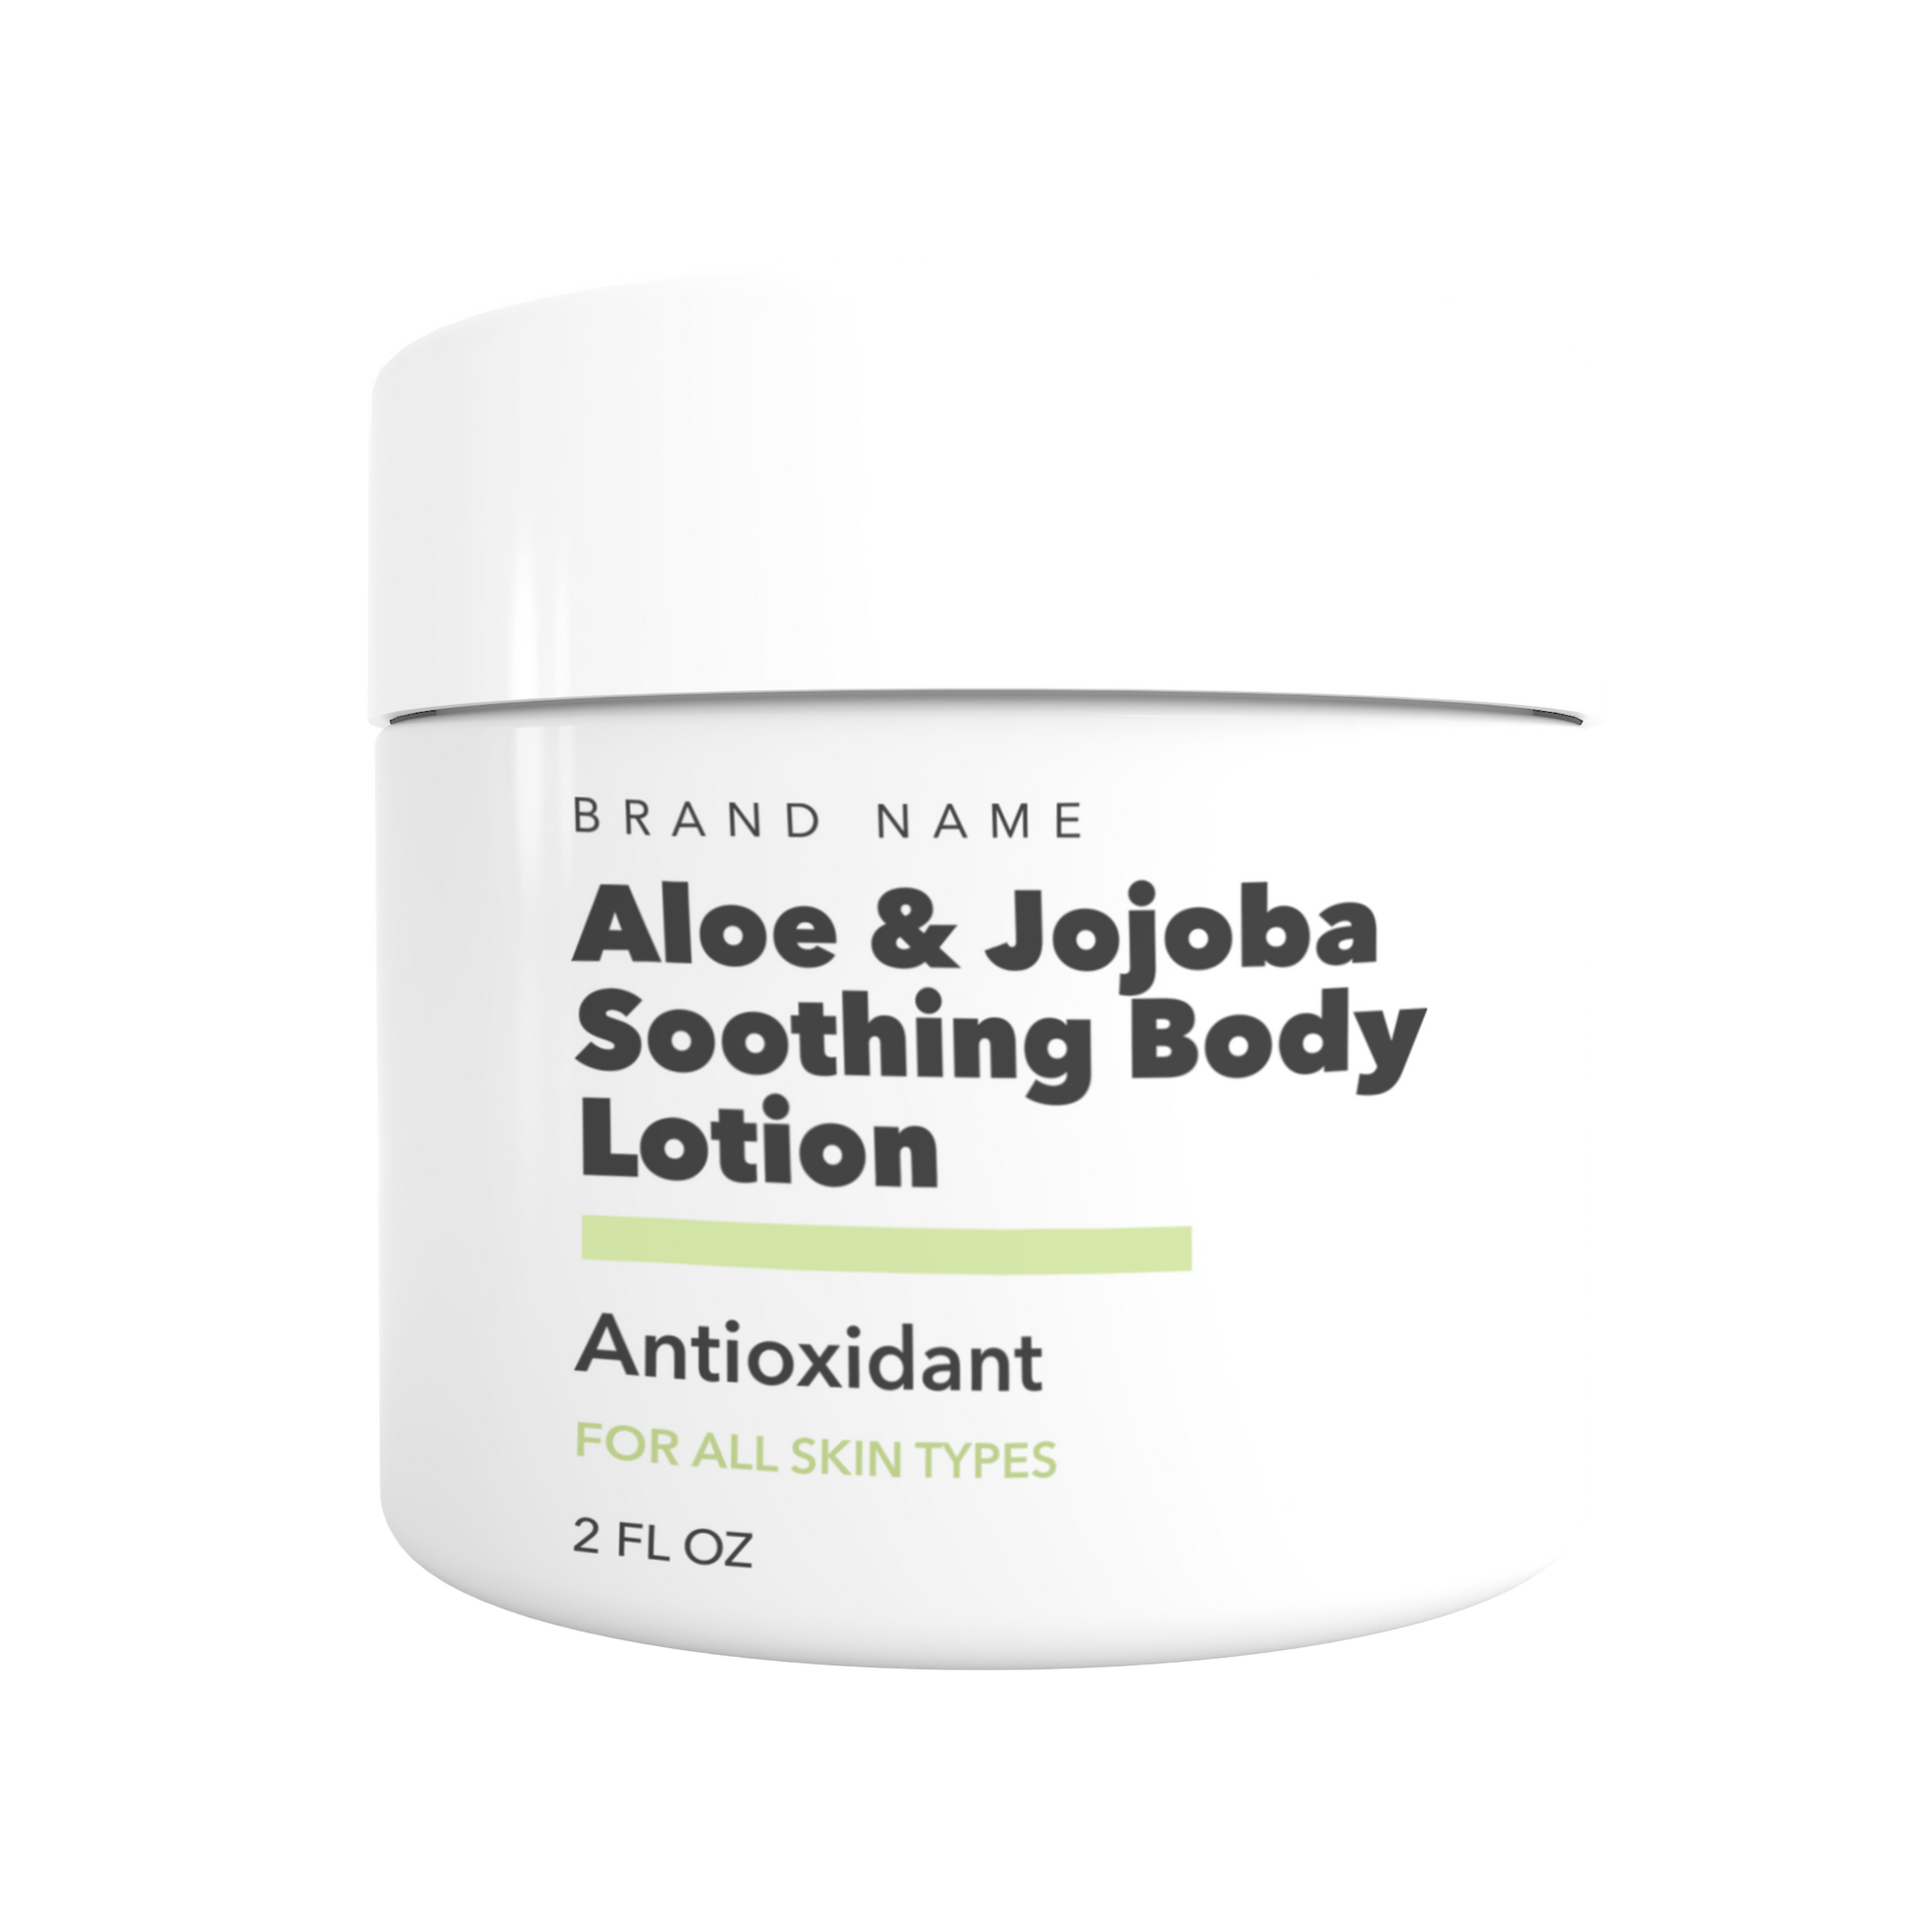 Aloe & Jojoba Soothing Body Lotion